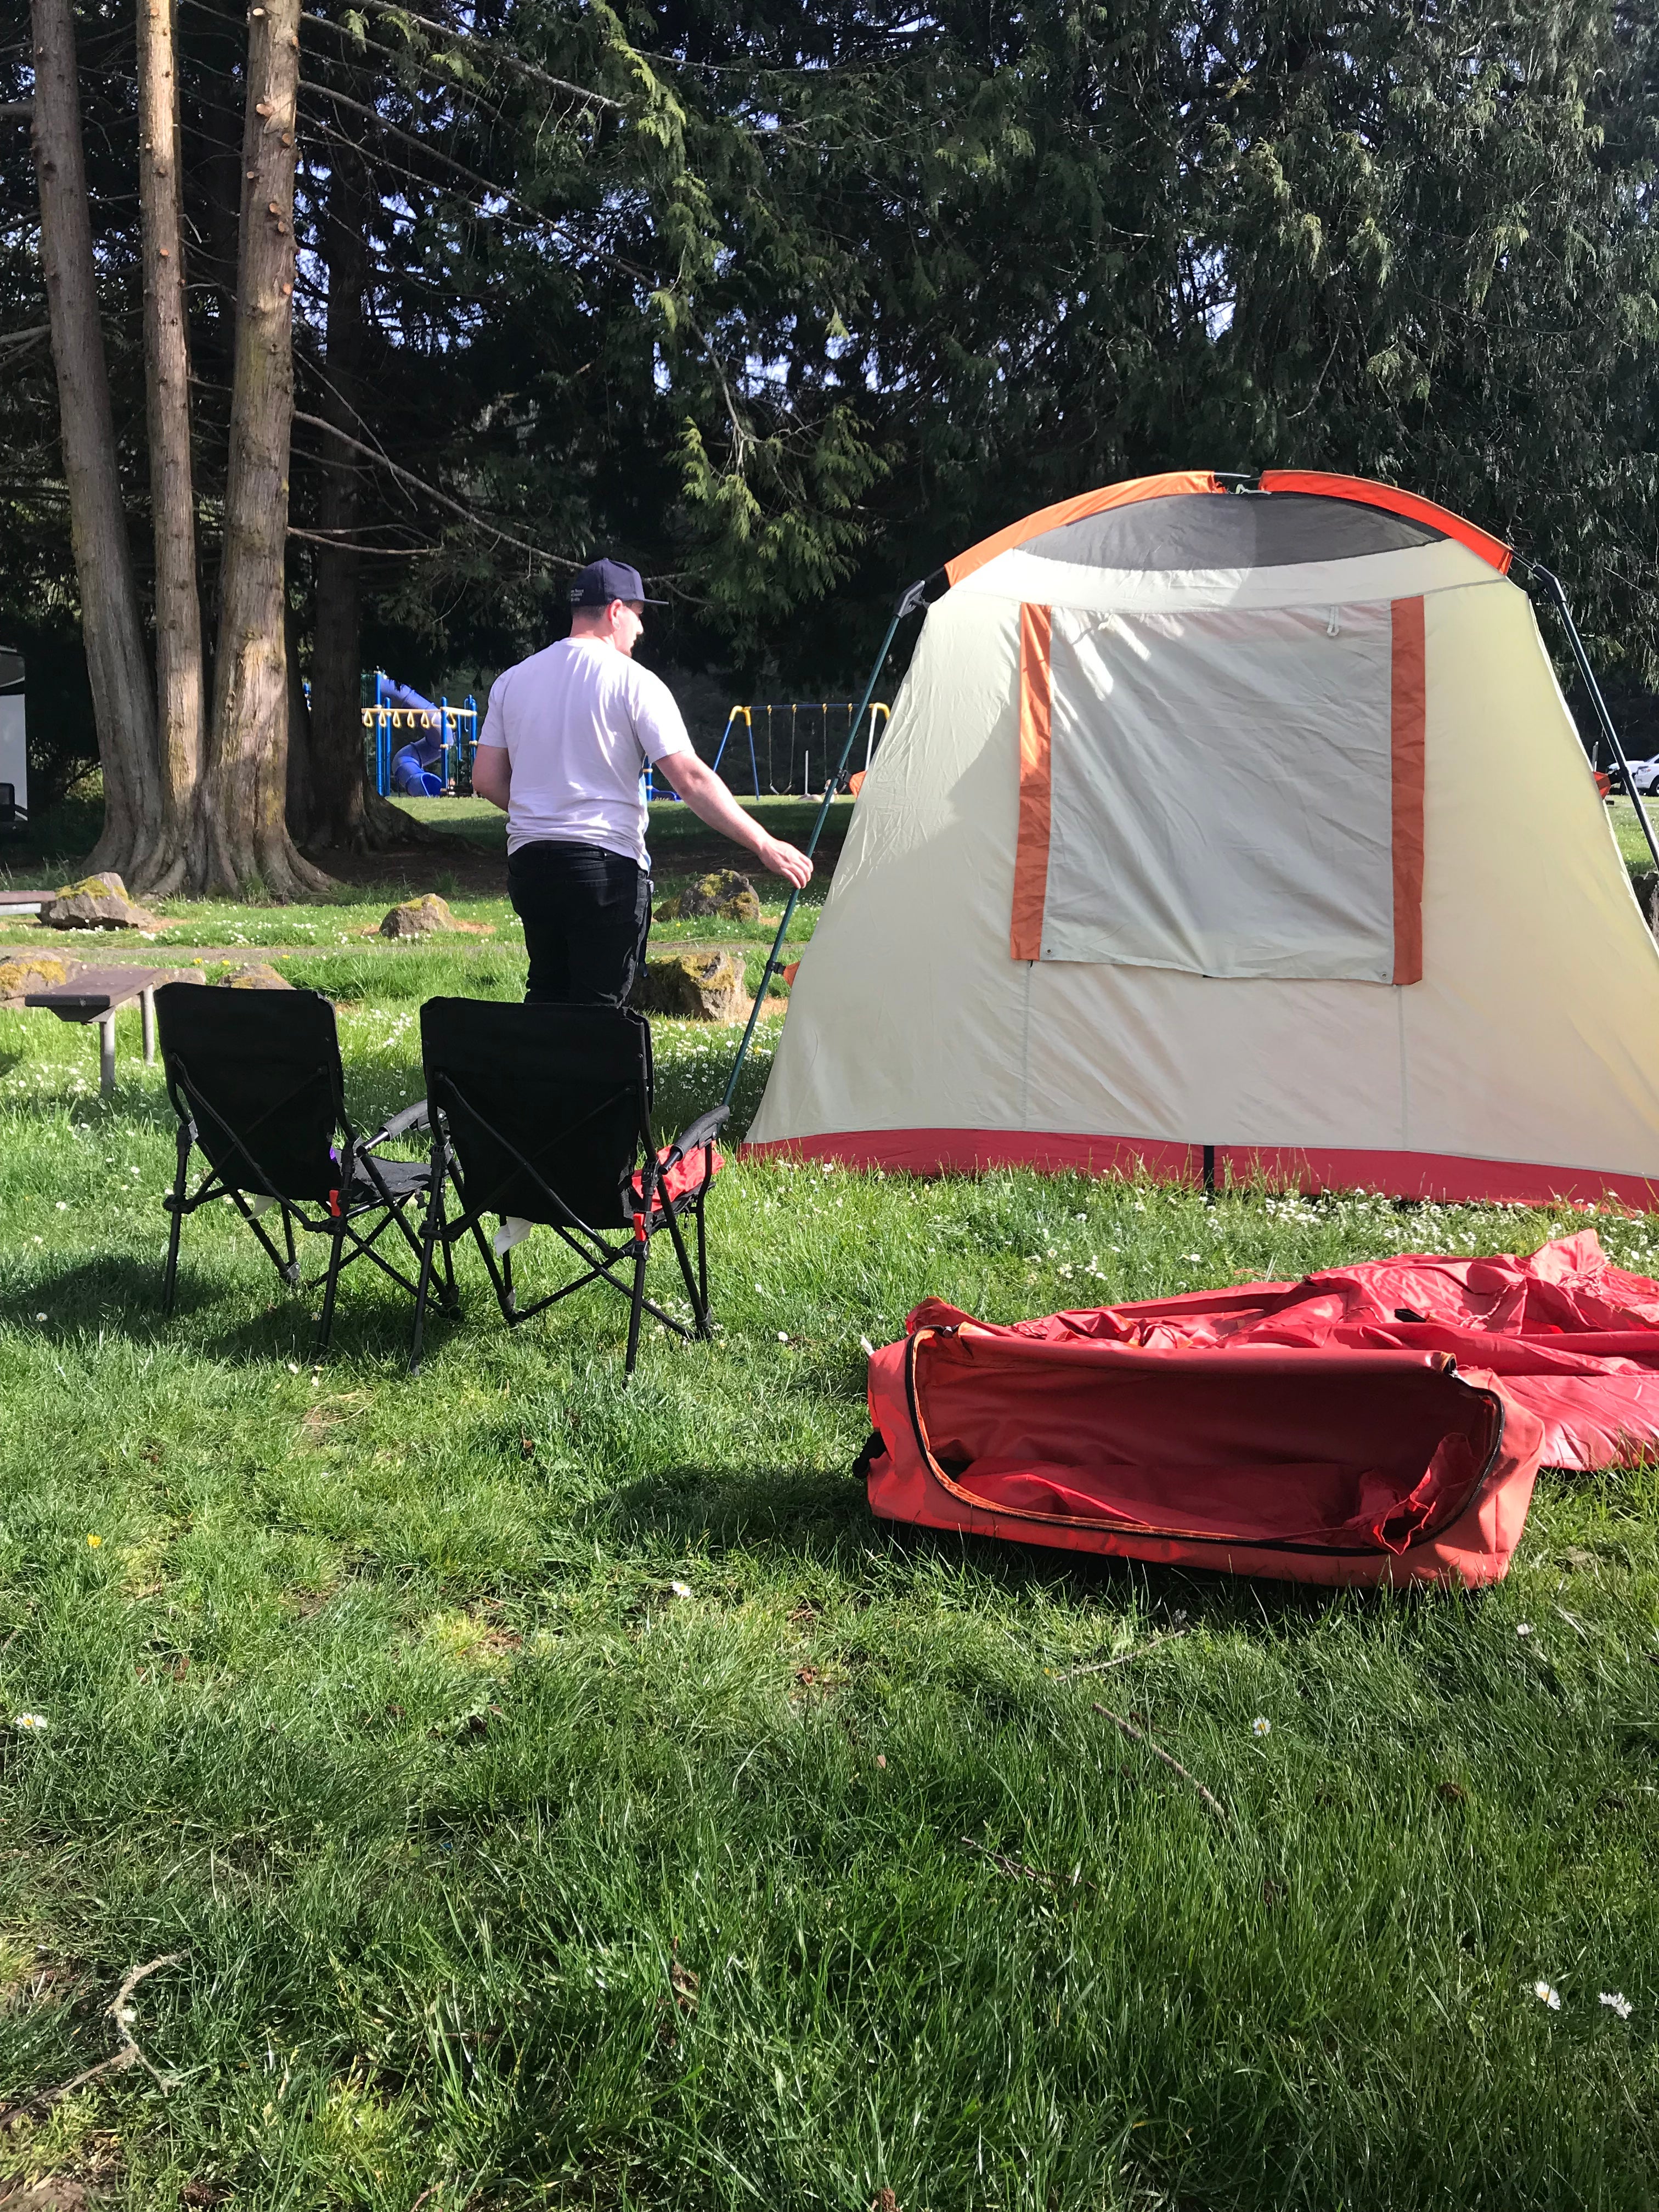 Setting up camp!